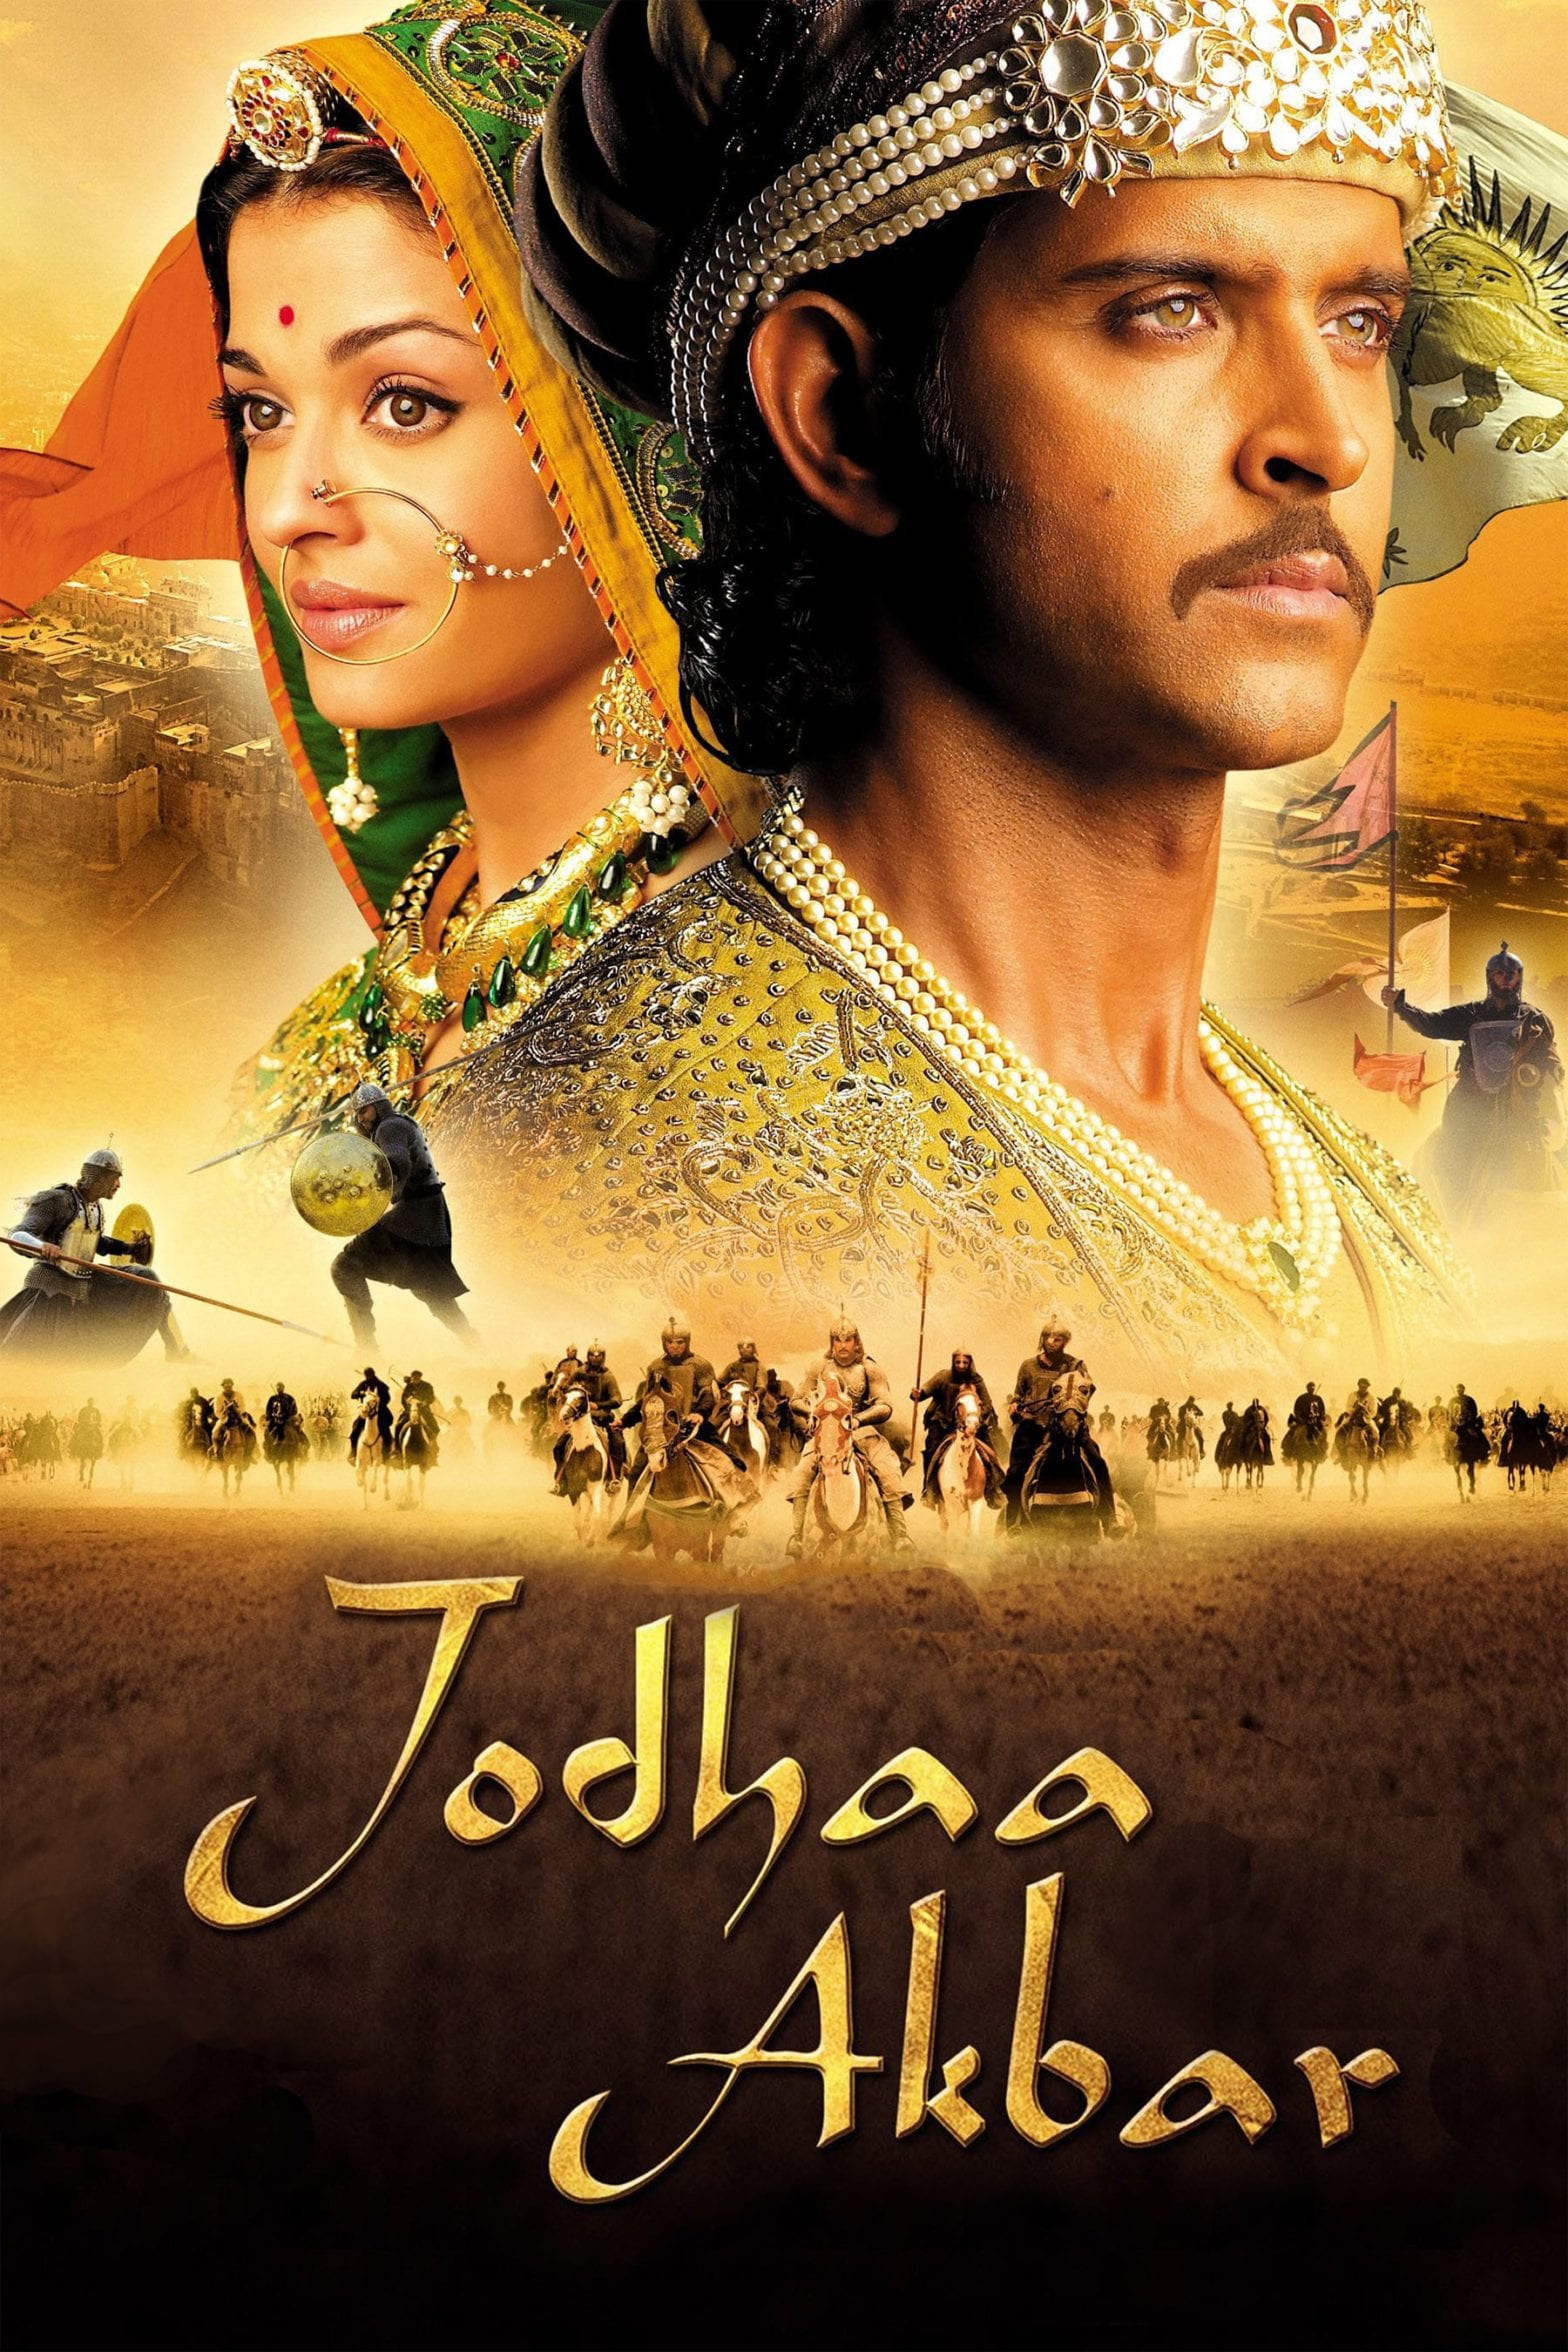 Poster for the movie "Jodhaa Akbar"